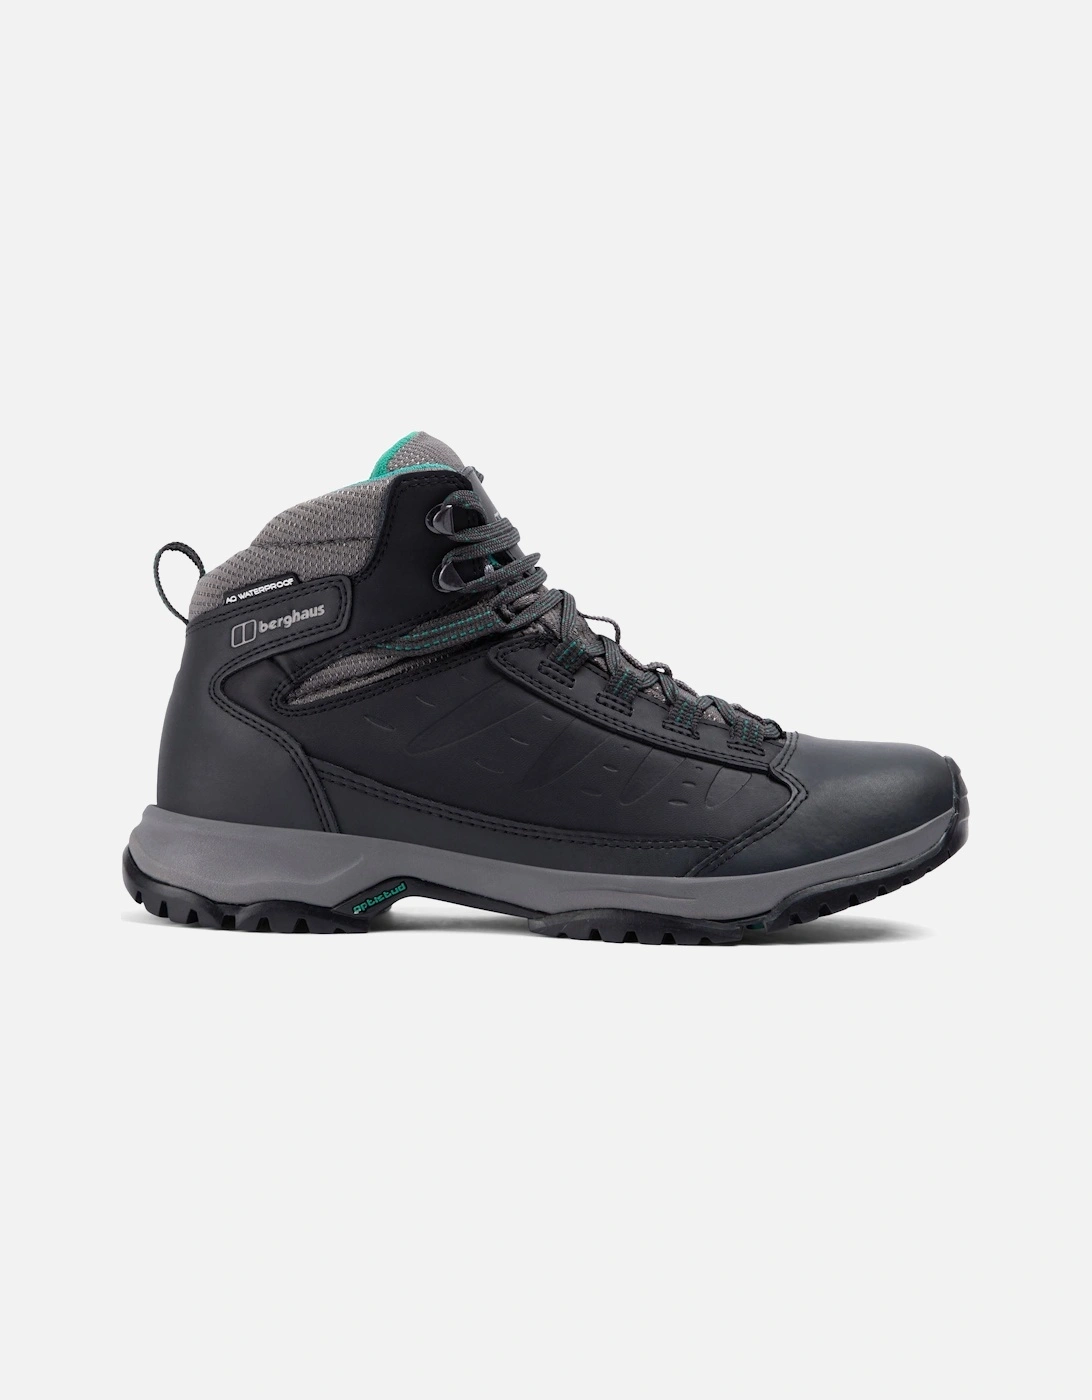 Womens Expeditor Ridge 2.0 Waterproof Leather Walking Boots - Black/Grey